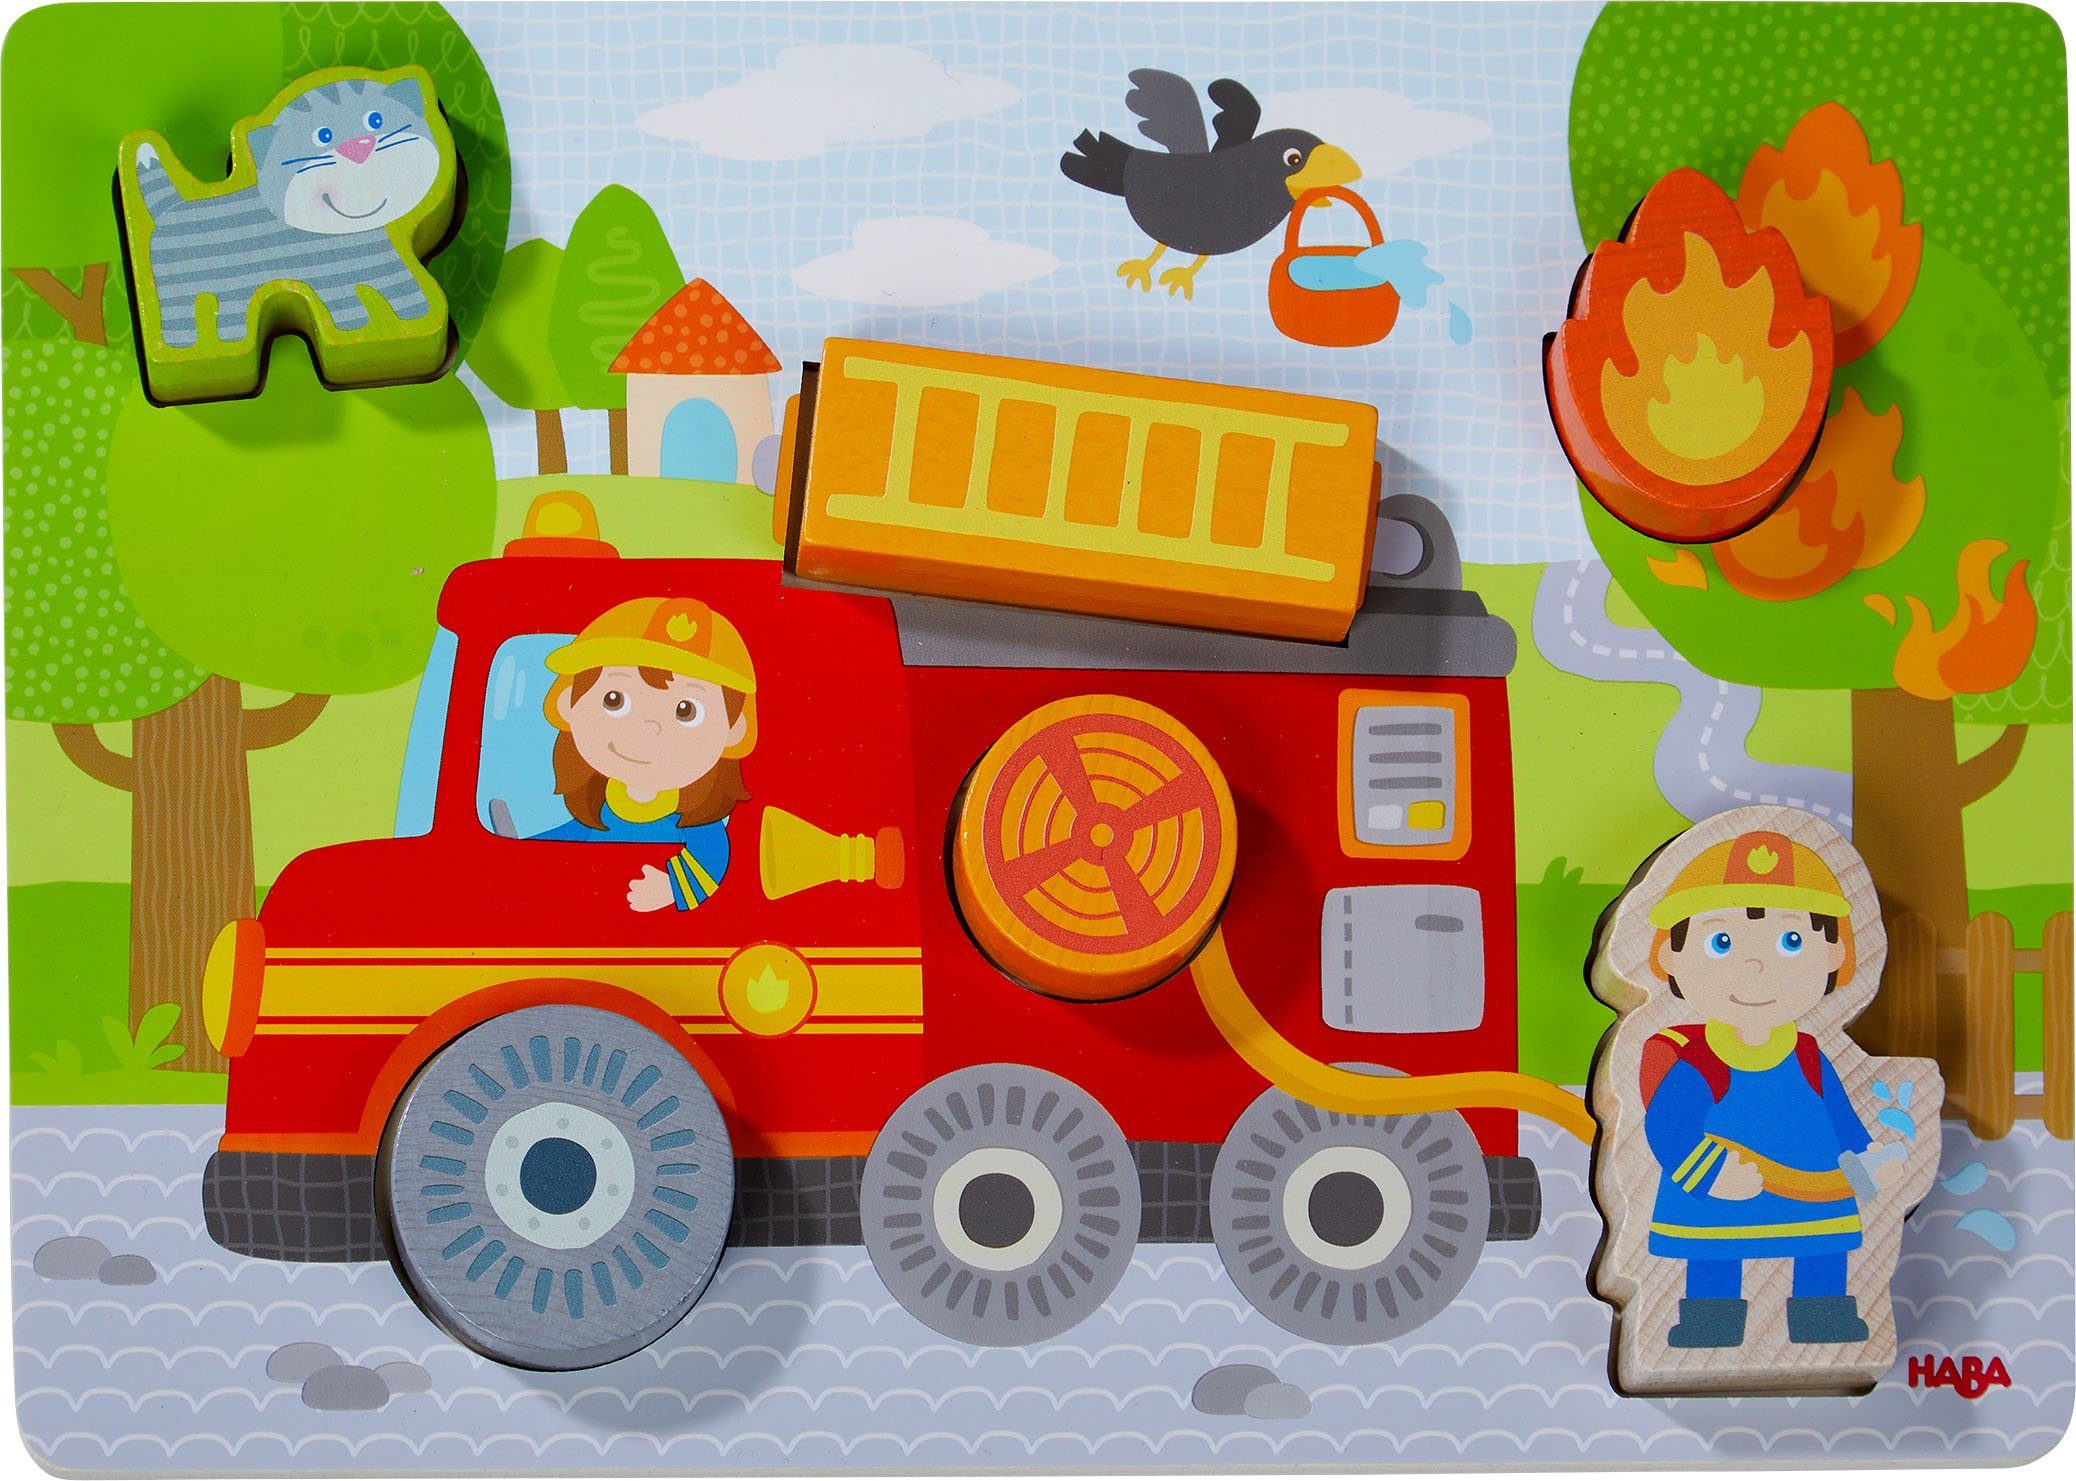 Haba Steckpuzzle Holzspielzeug, Feuerwehrauto, 7 Puzzleteile, aus Holz